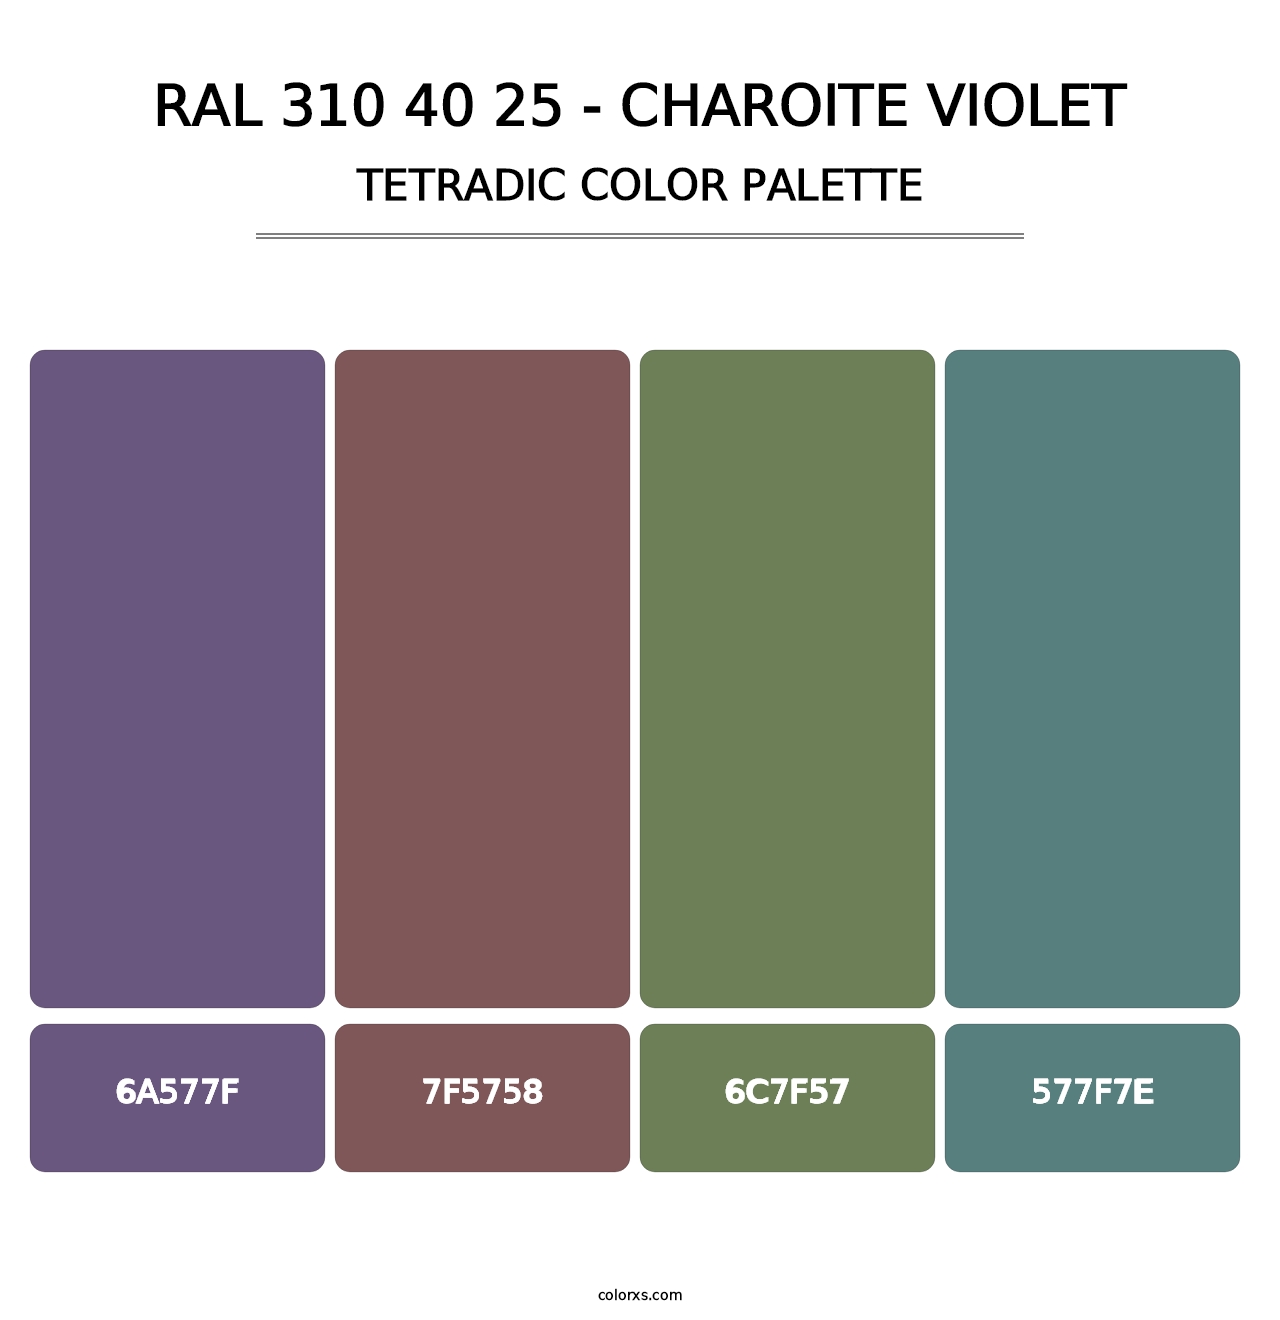 RAL 310 40 25 - Charoite Violet - Tetradic Color Palette